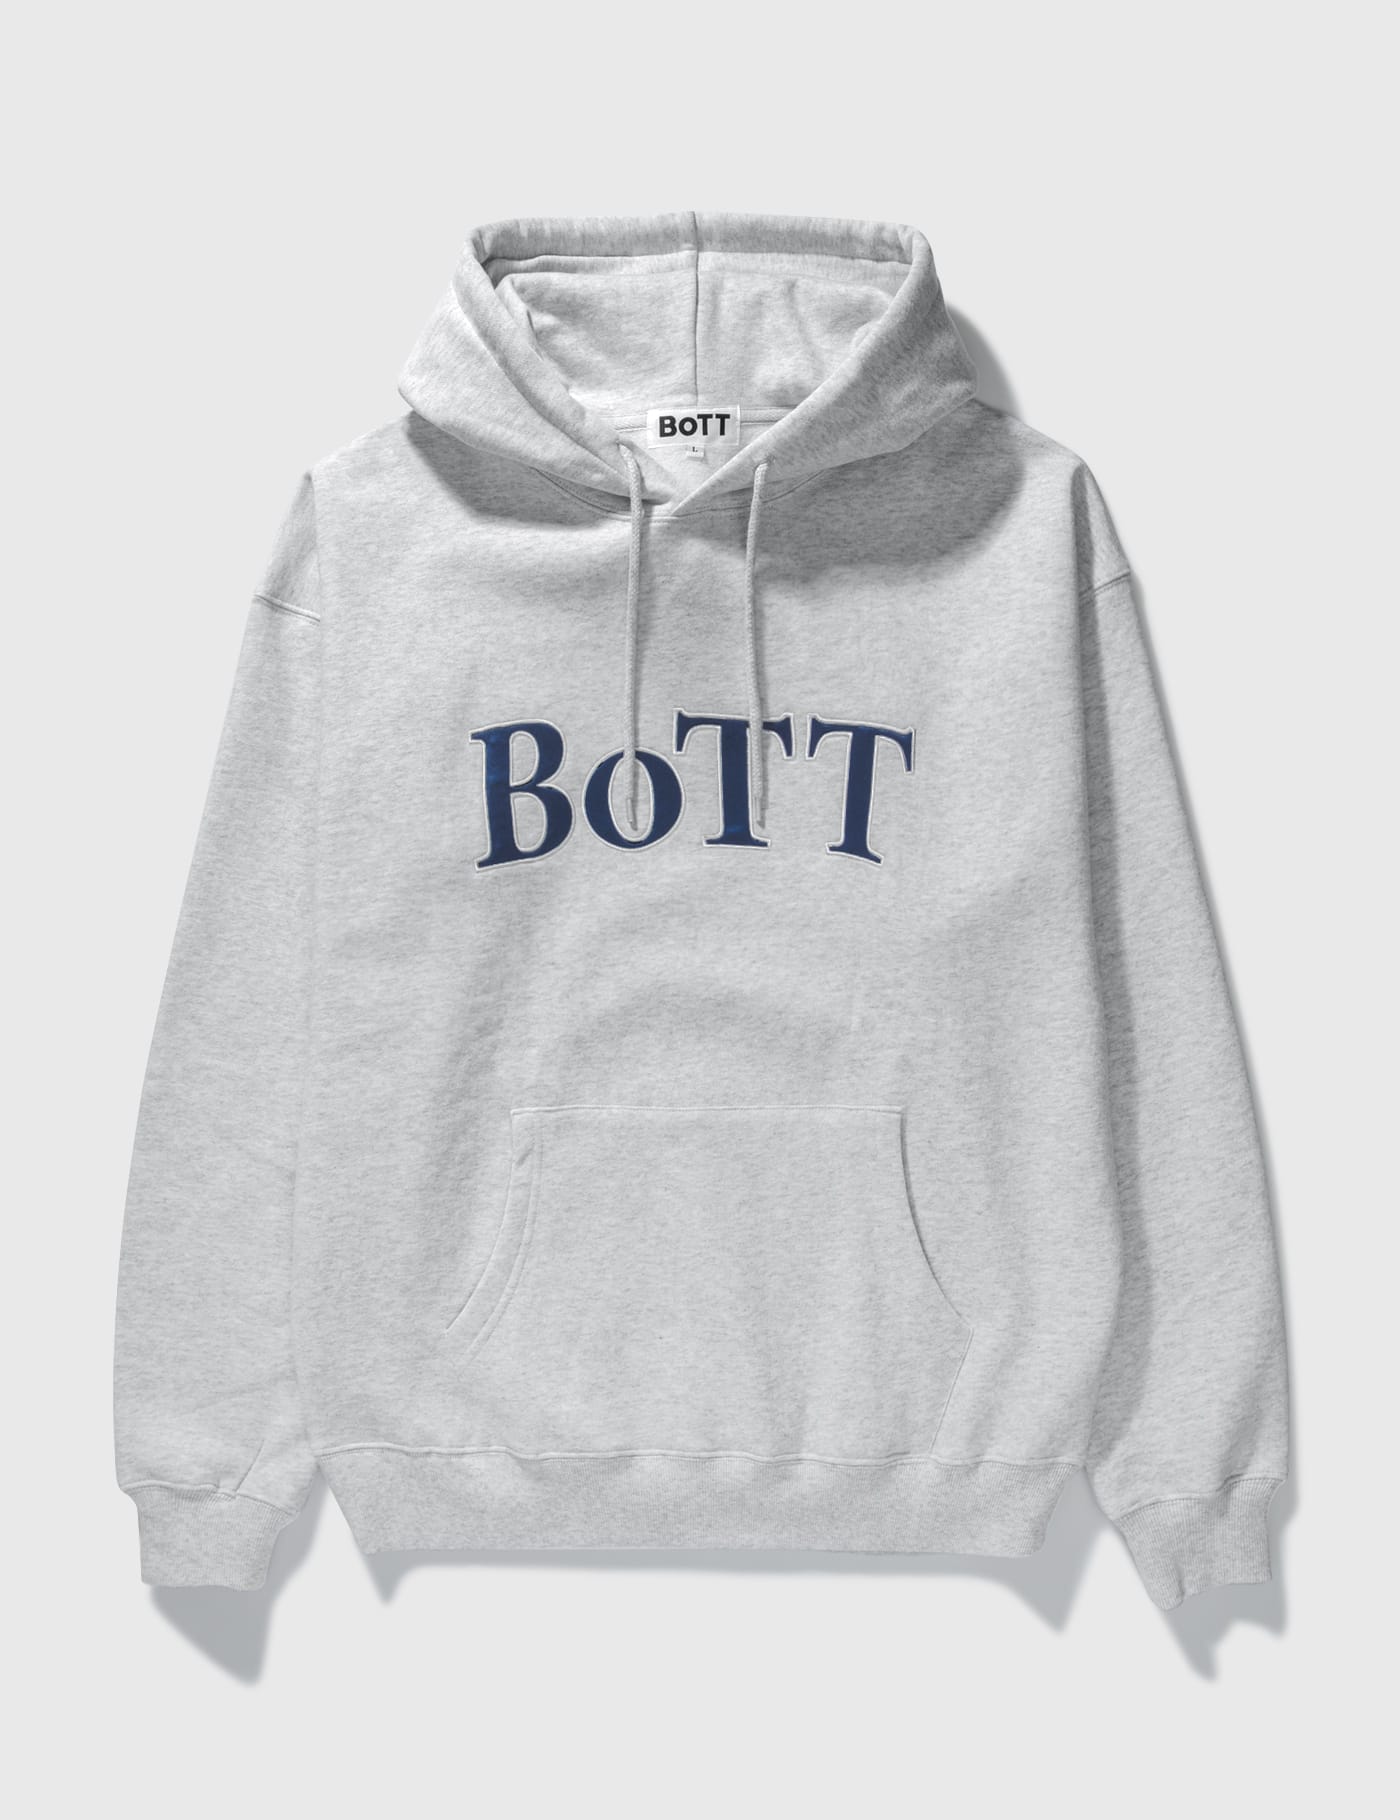 BoTT - BoTT OG Logo Hoodie | HBX - HYPEBEAST 为您搜罗全球潮流时尚品牌